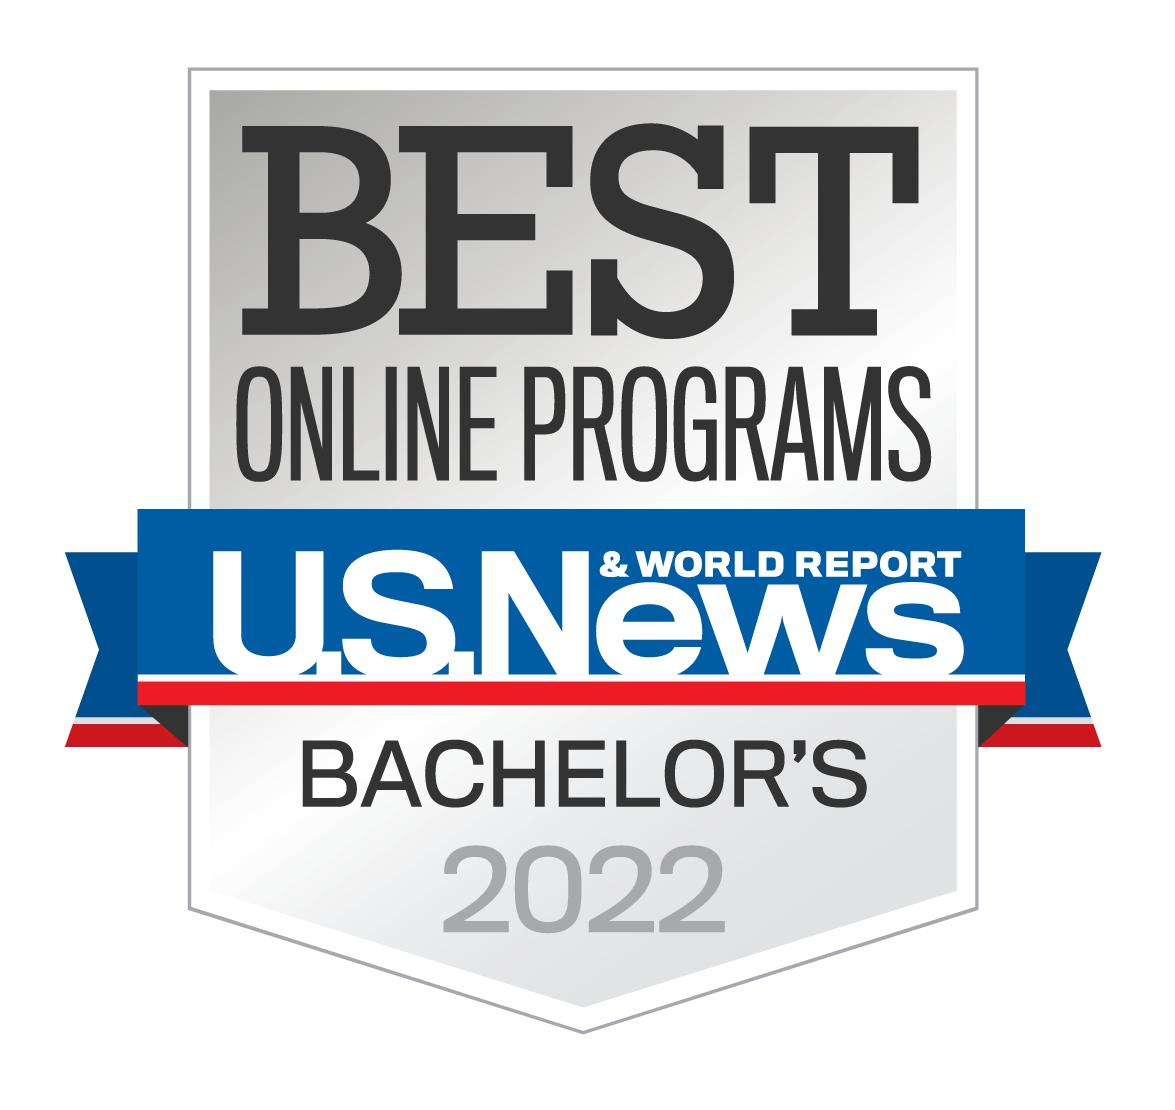 Best Online Programs Bachelors 2022